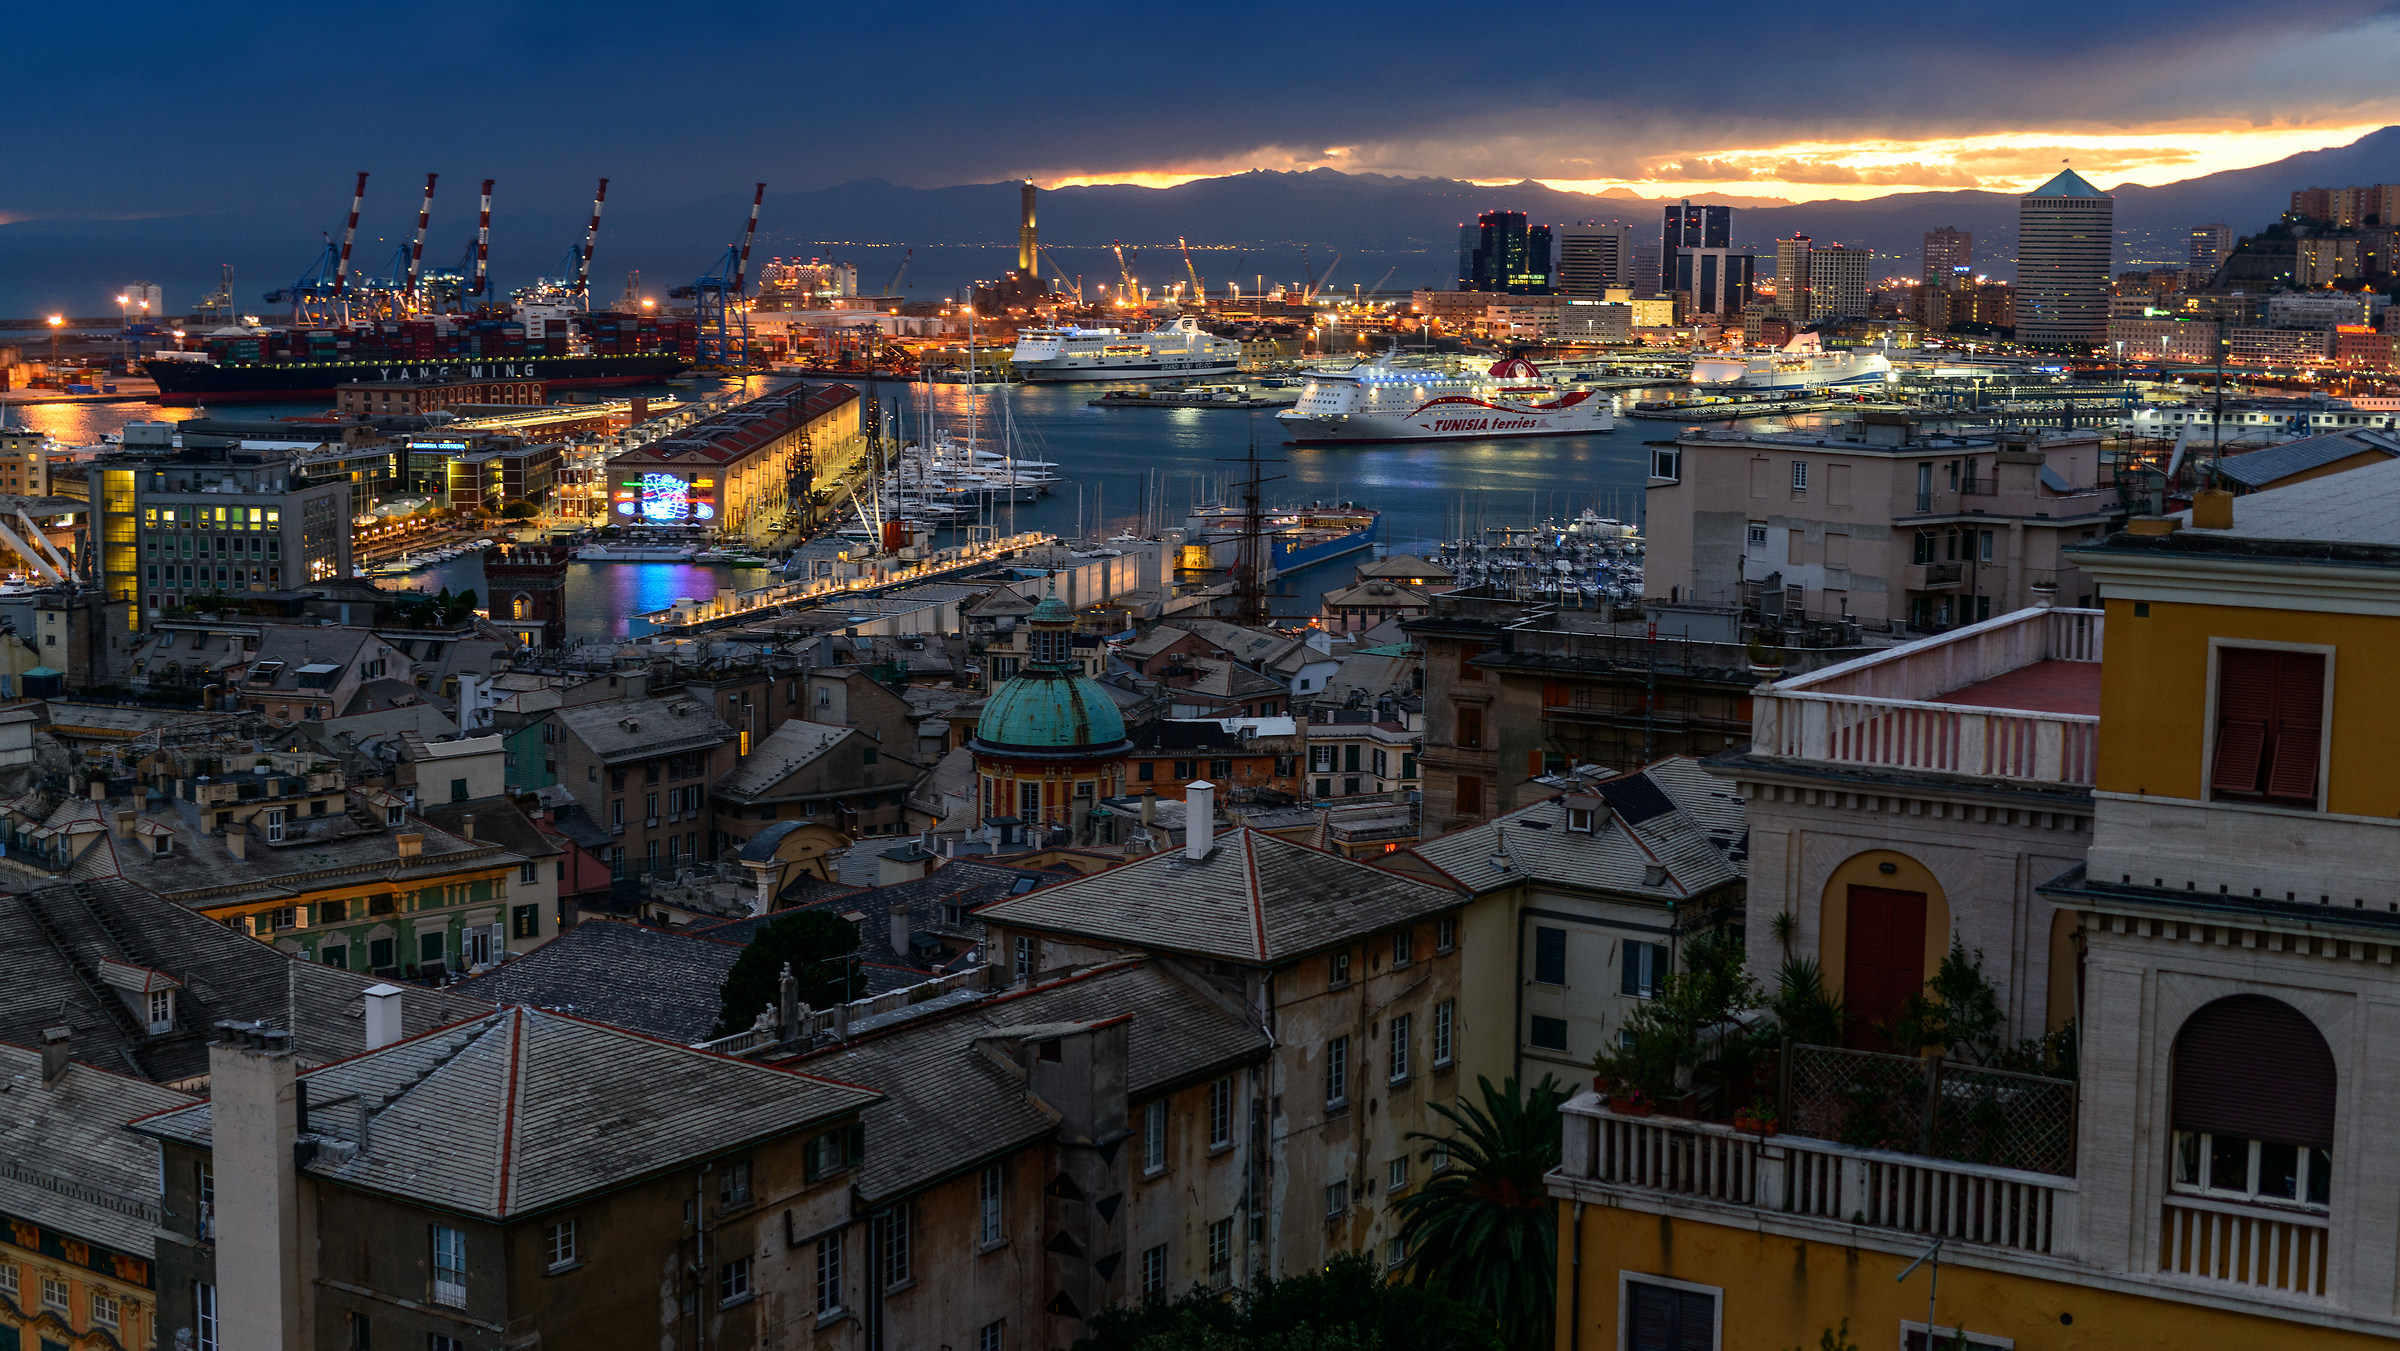 Sunset in Genoa...